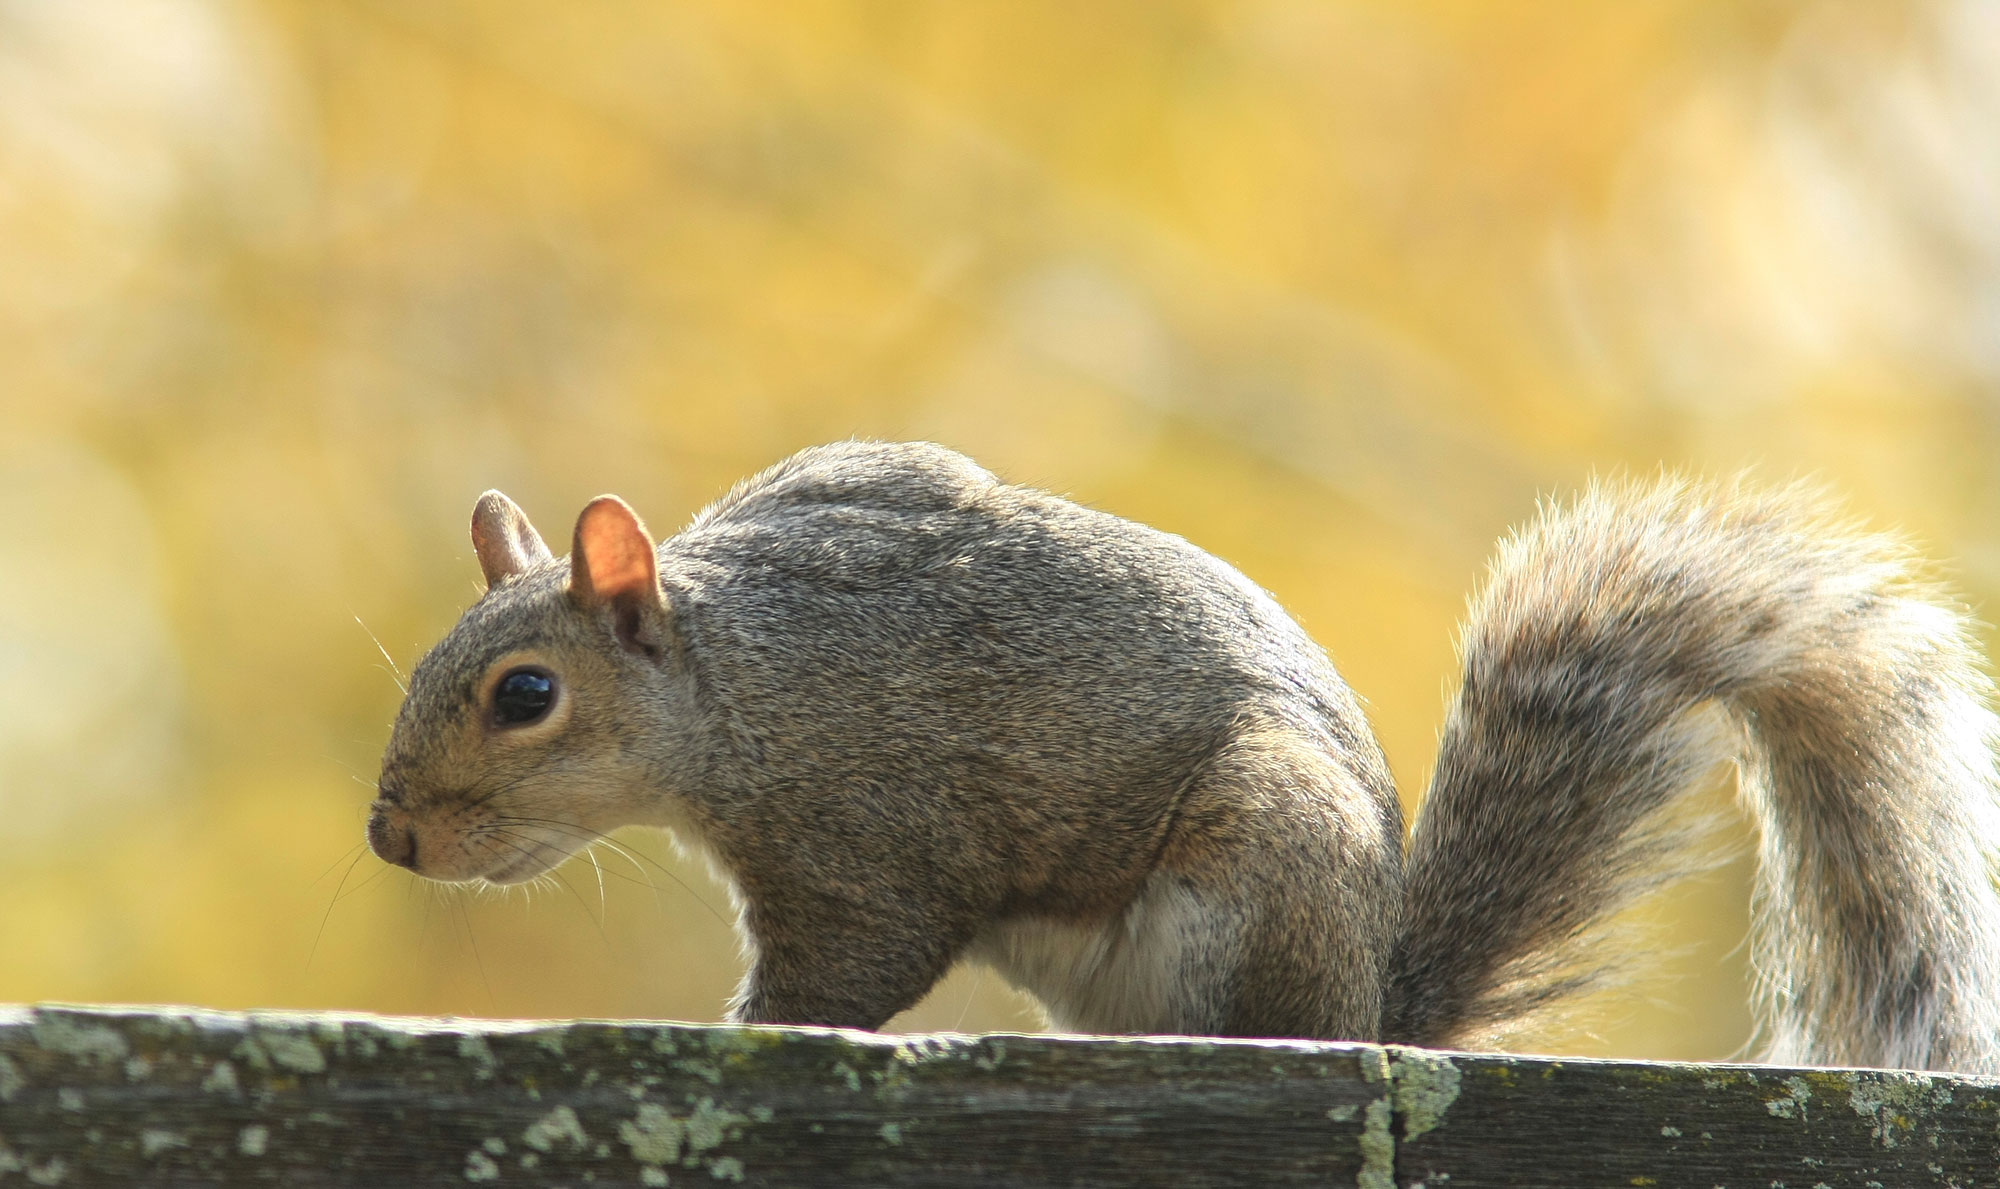 Closeup of an eastern gray squirrel.